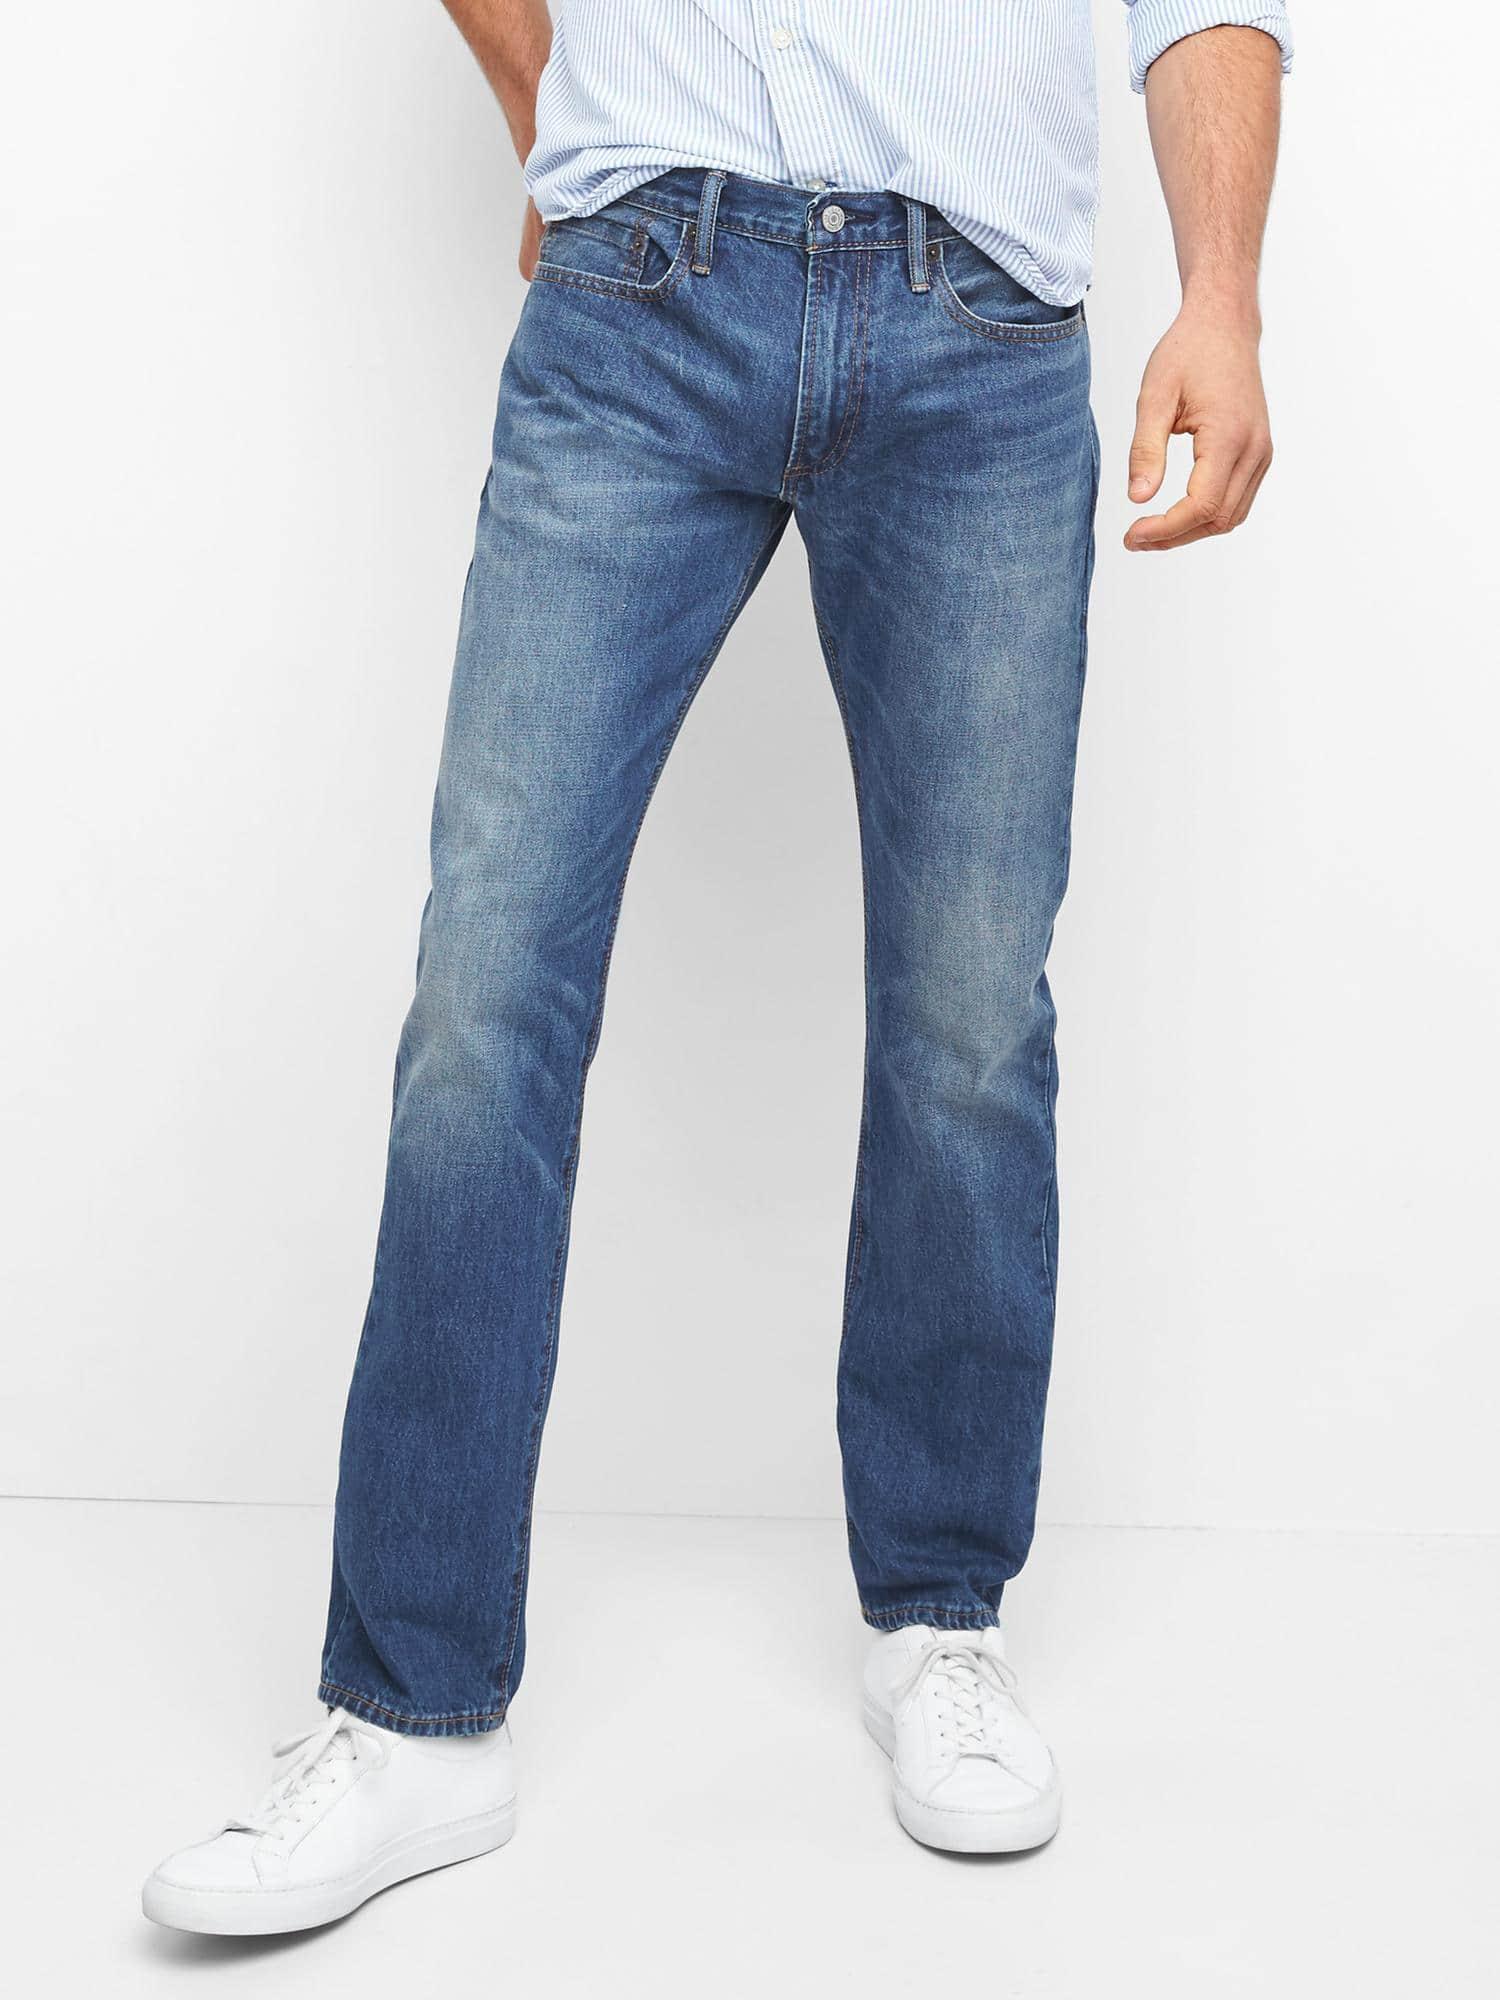 Gap Denim Slim Fit Jeans in Blue for Men - Lyst